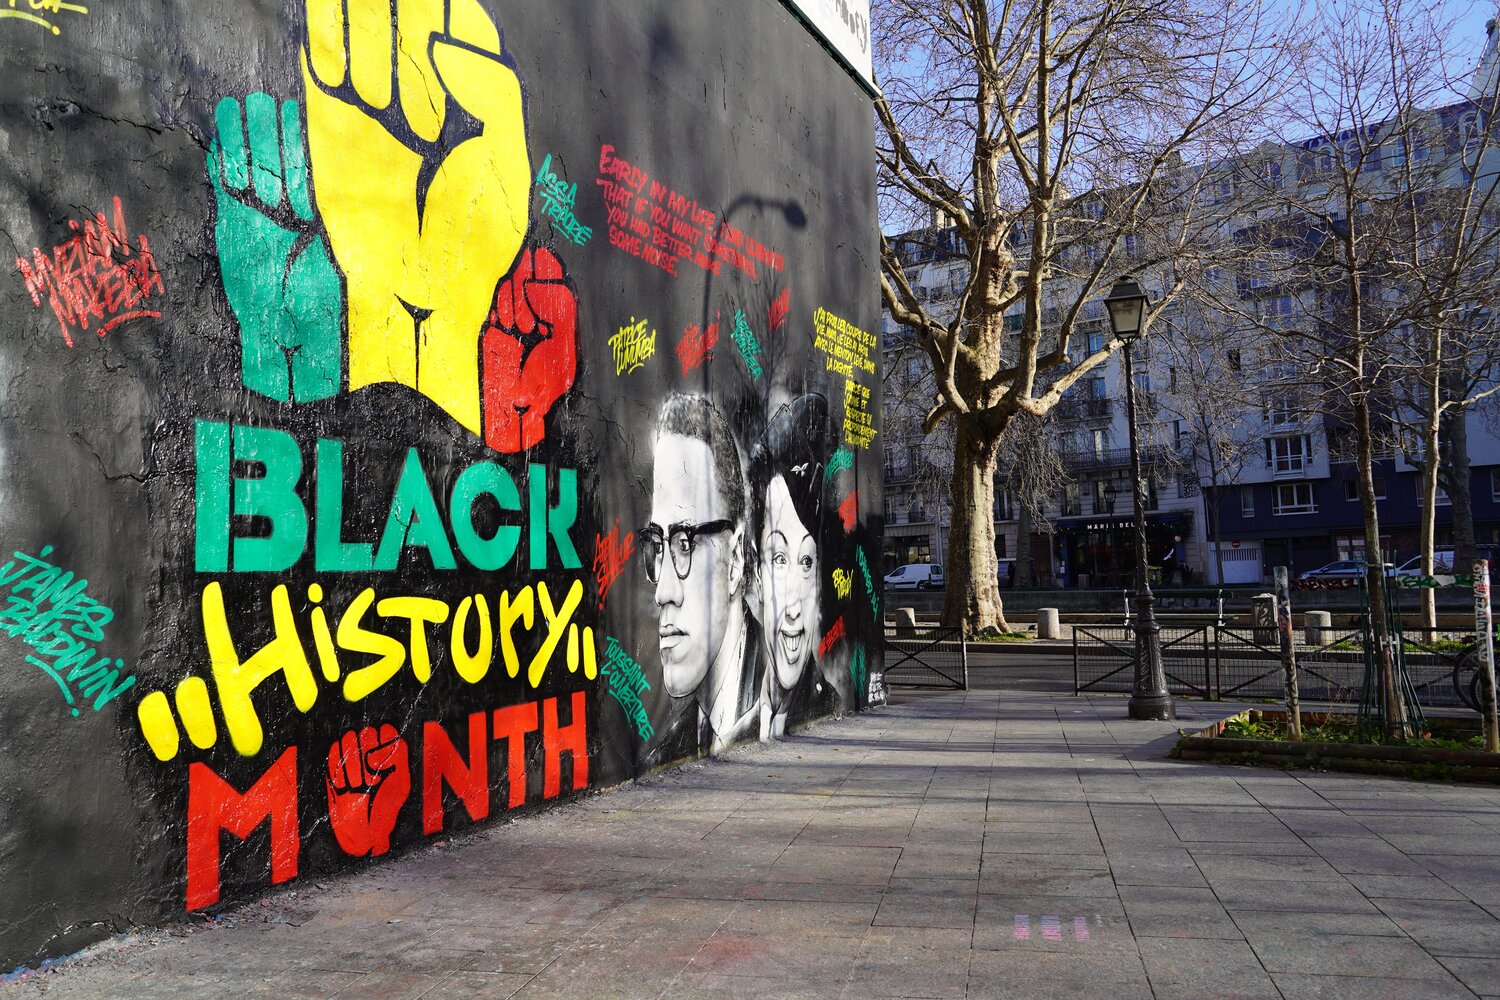 Black History Month graffiti in Paris.